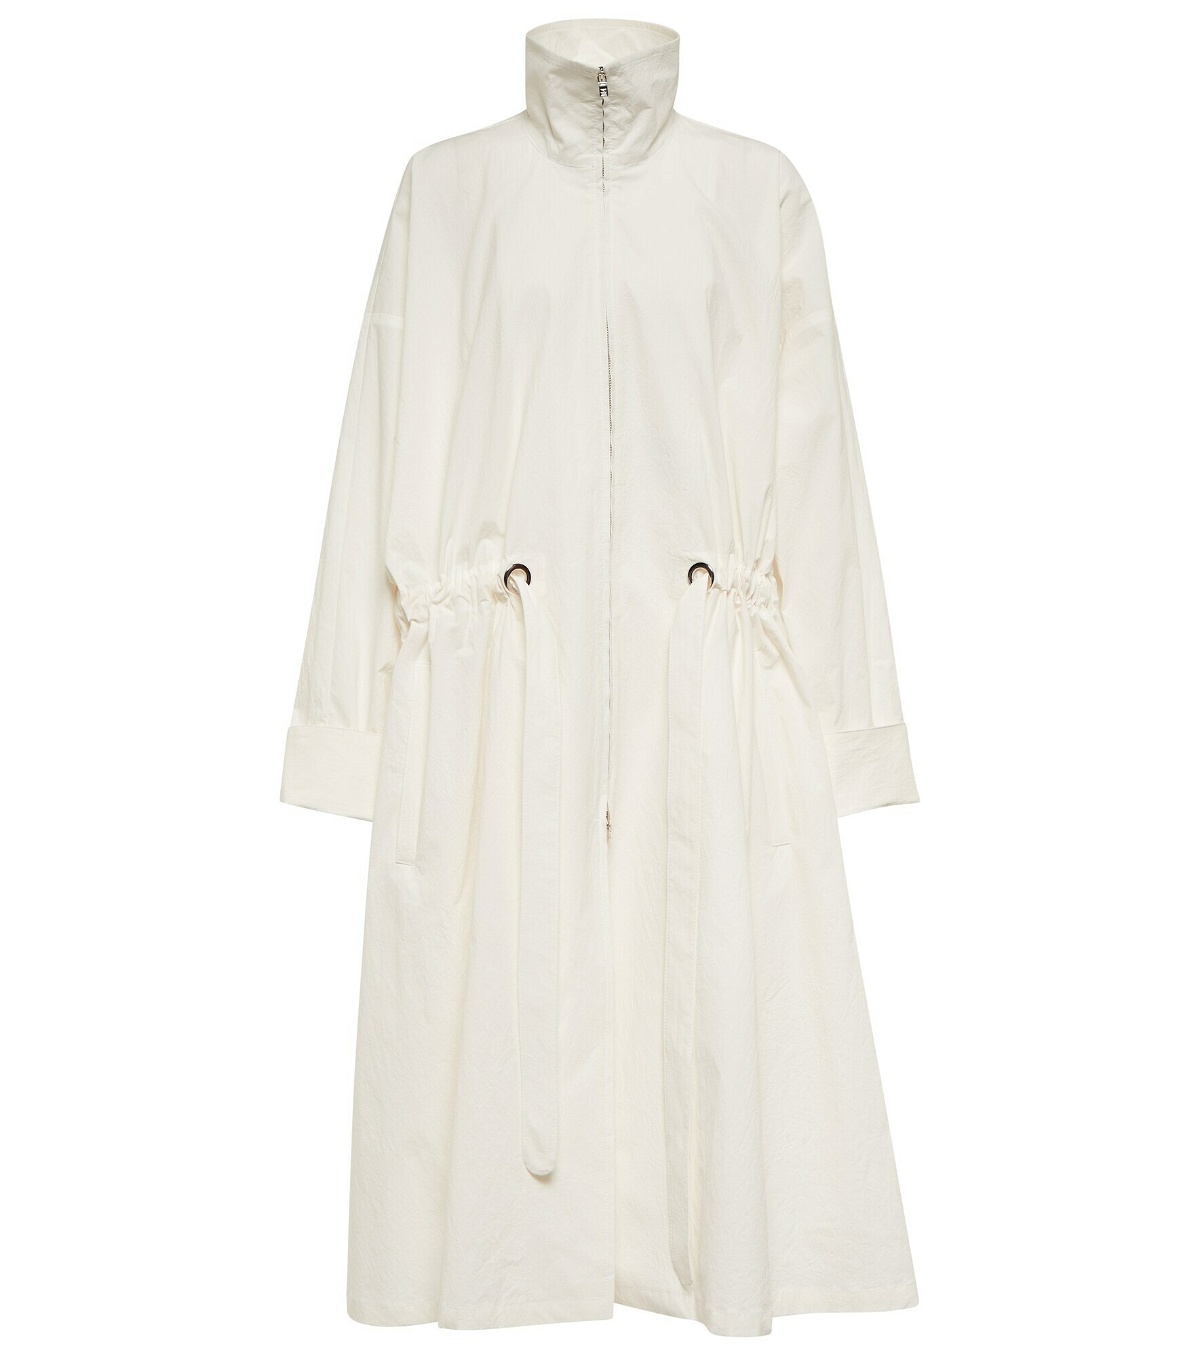 Toteme - High-neck cotton-blend coat Toteme